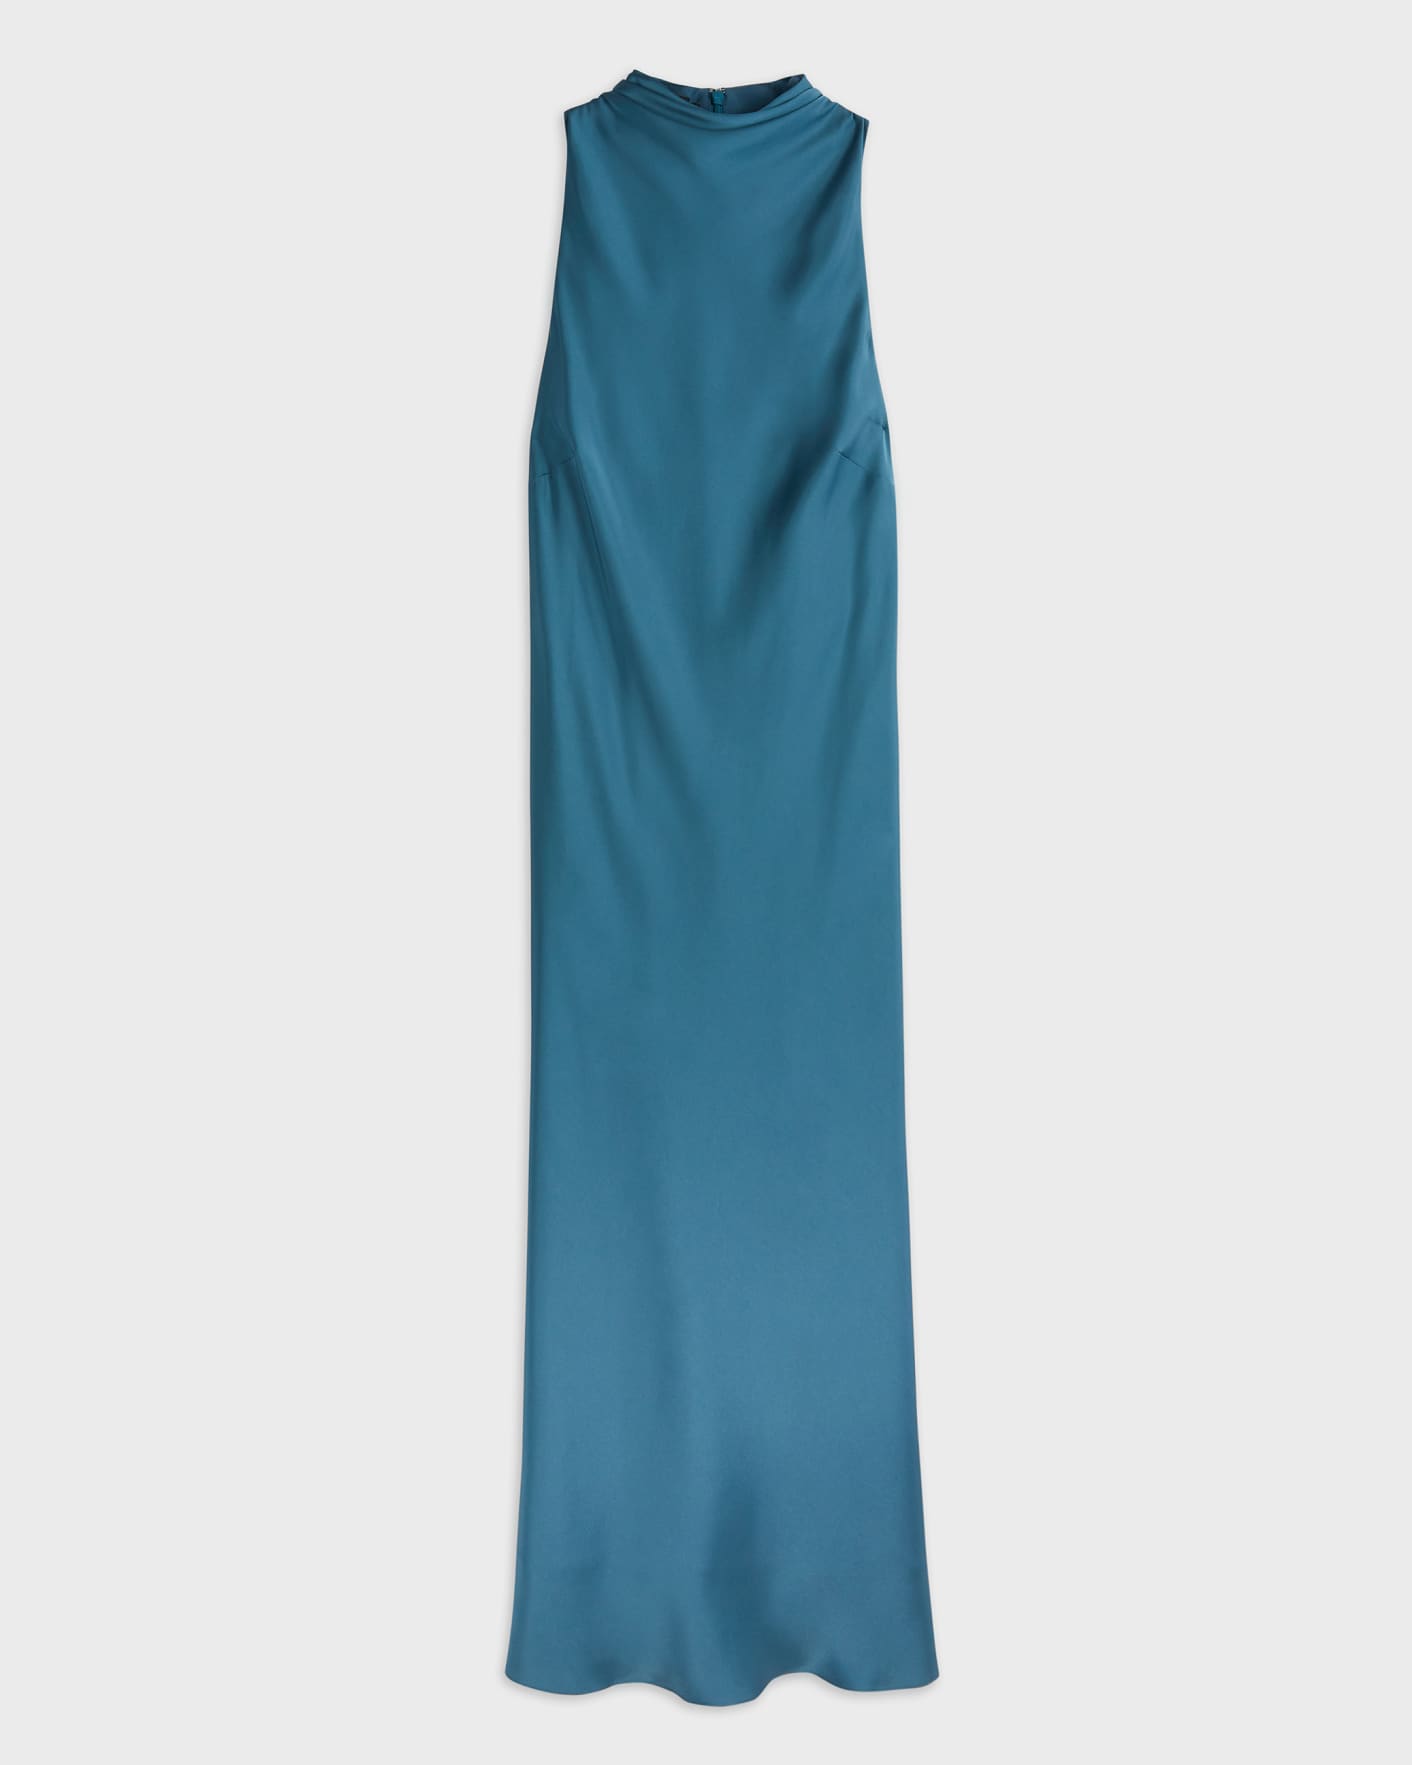 Medium Blue Cowl Neck Sleeveless Midi Dress Ted Baker